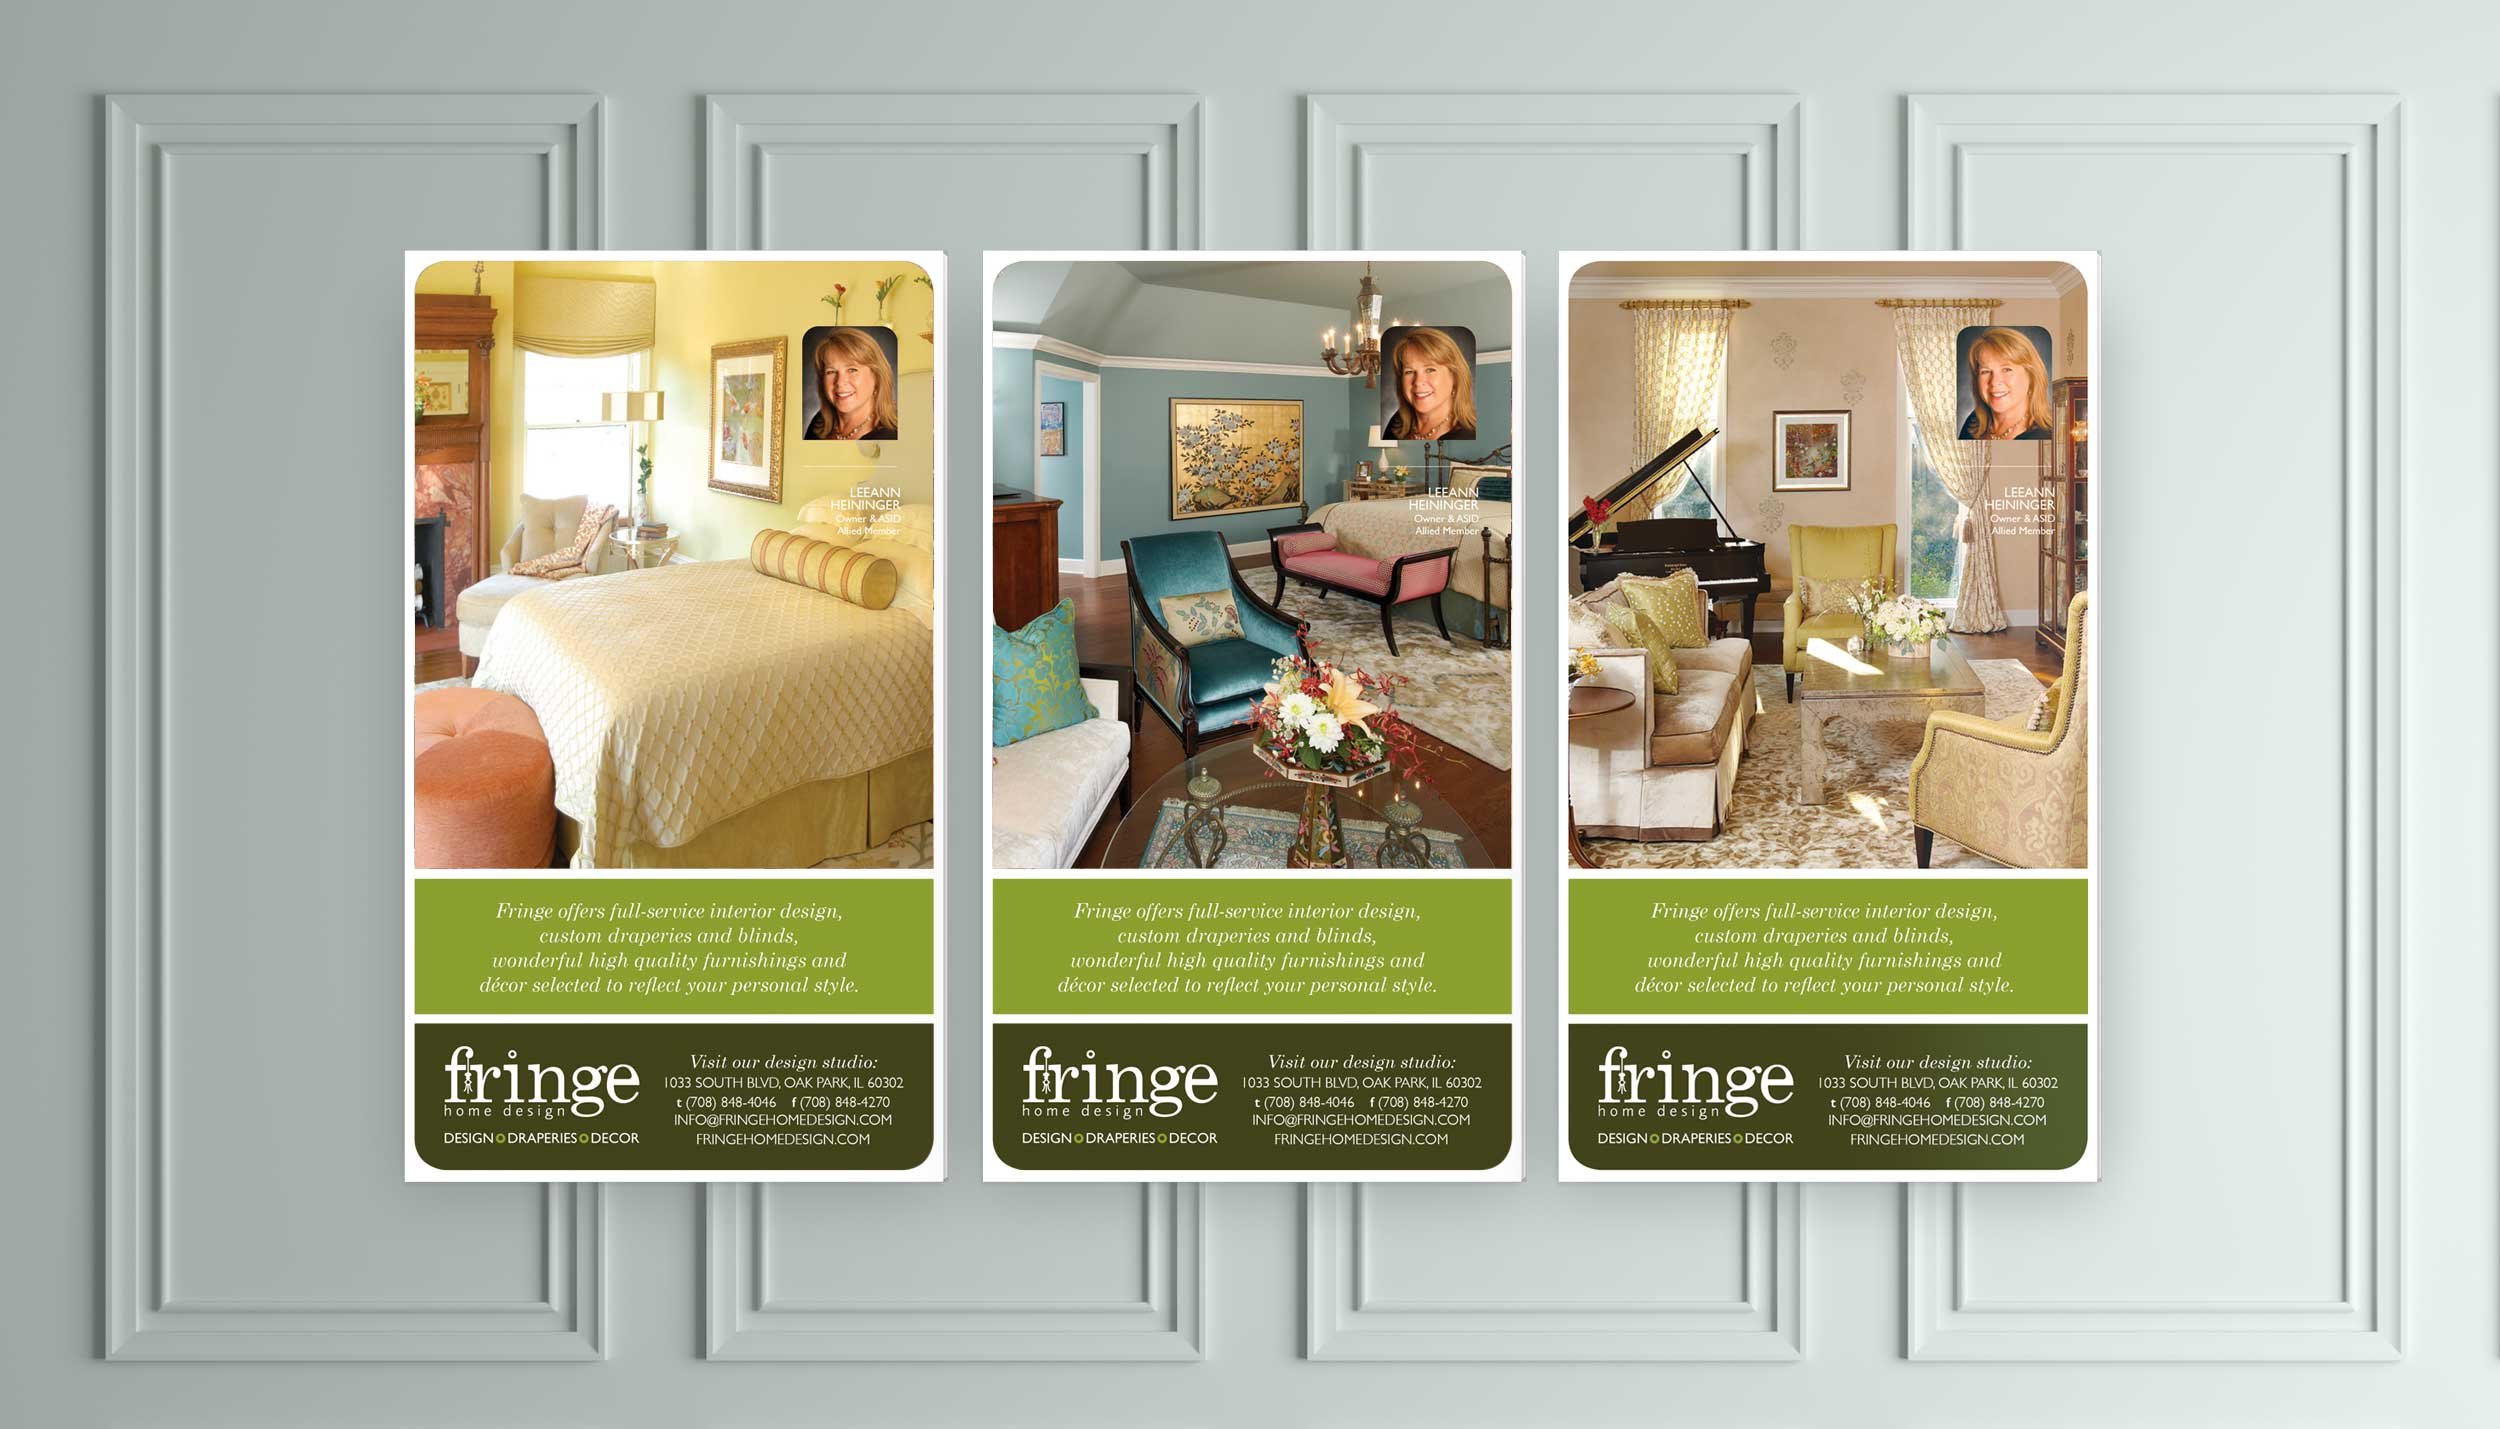 Fringe Details Interior Design Mood Board by Millsy - Style Sourcebook